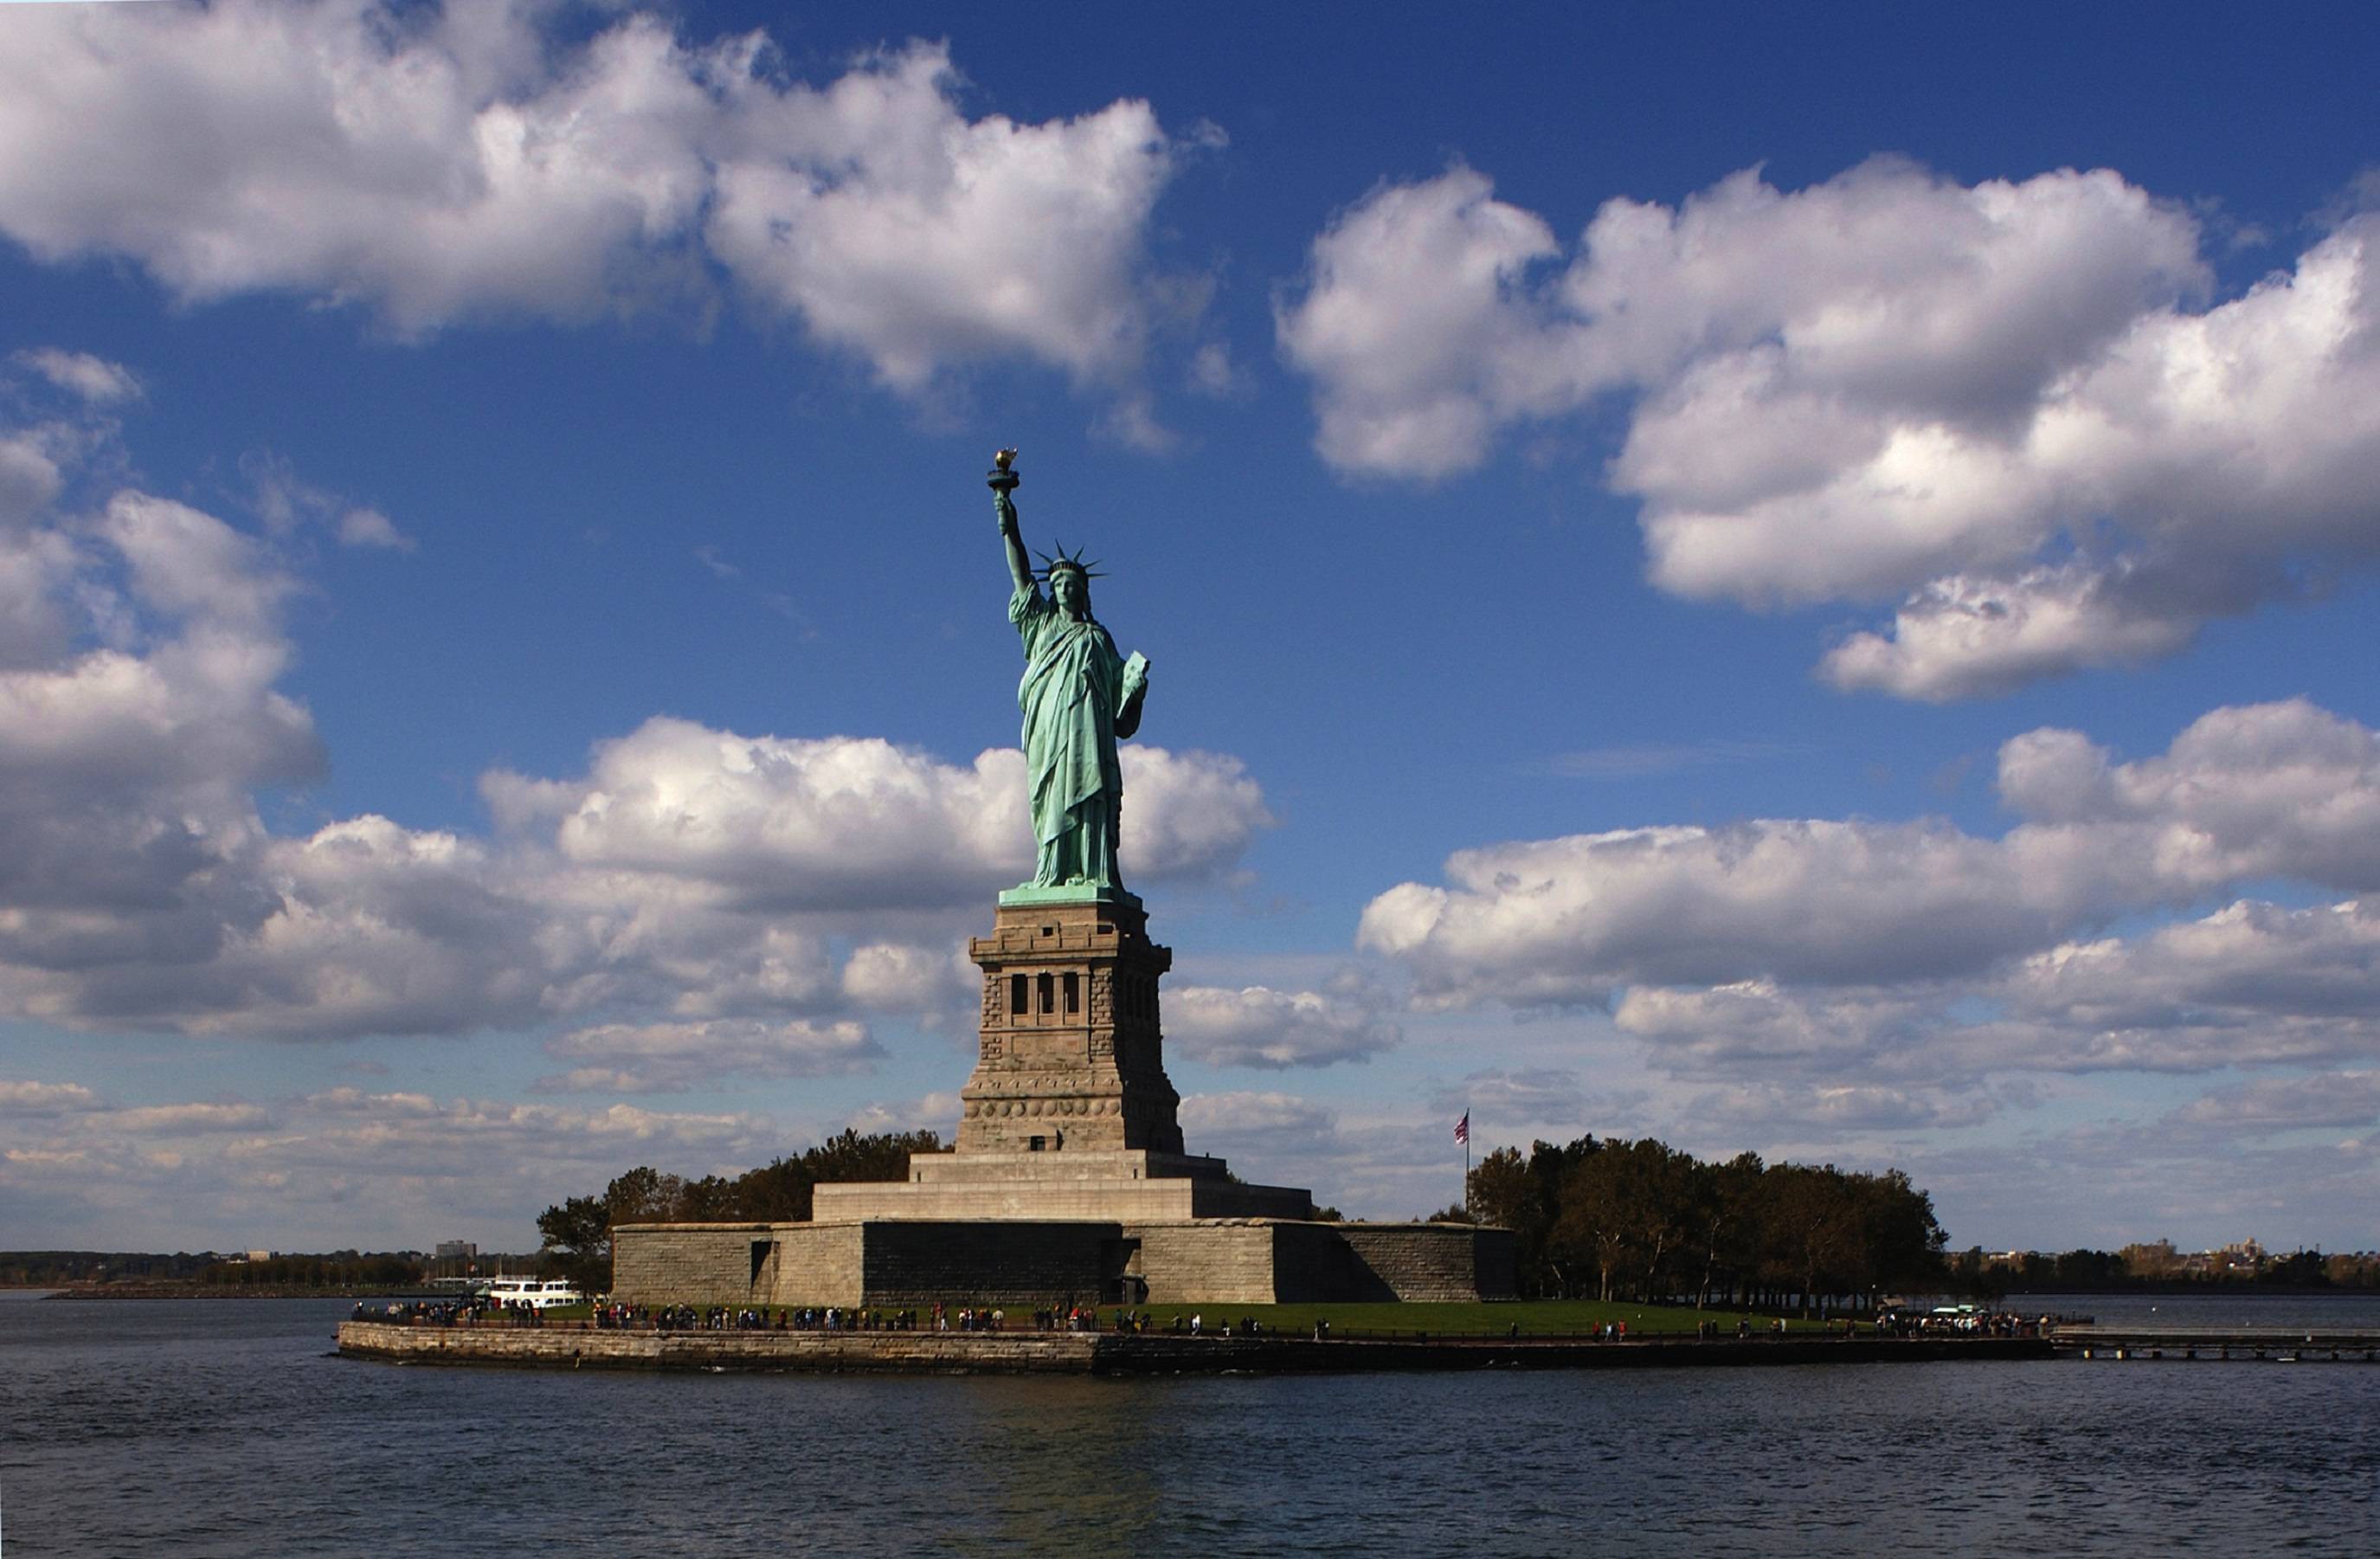 photos_Statue-of-Liberty-Island